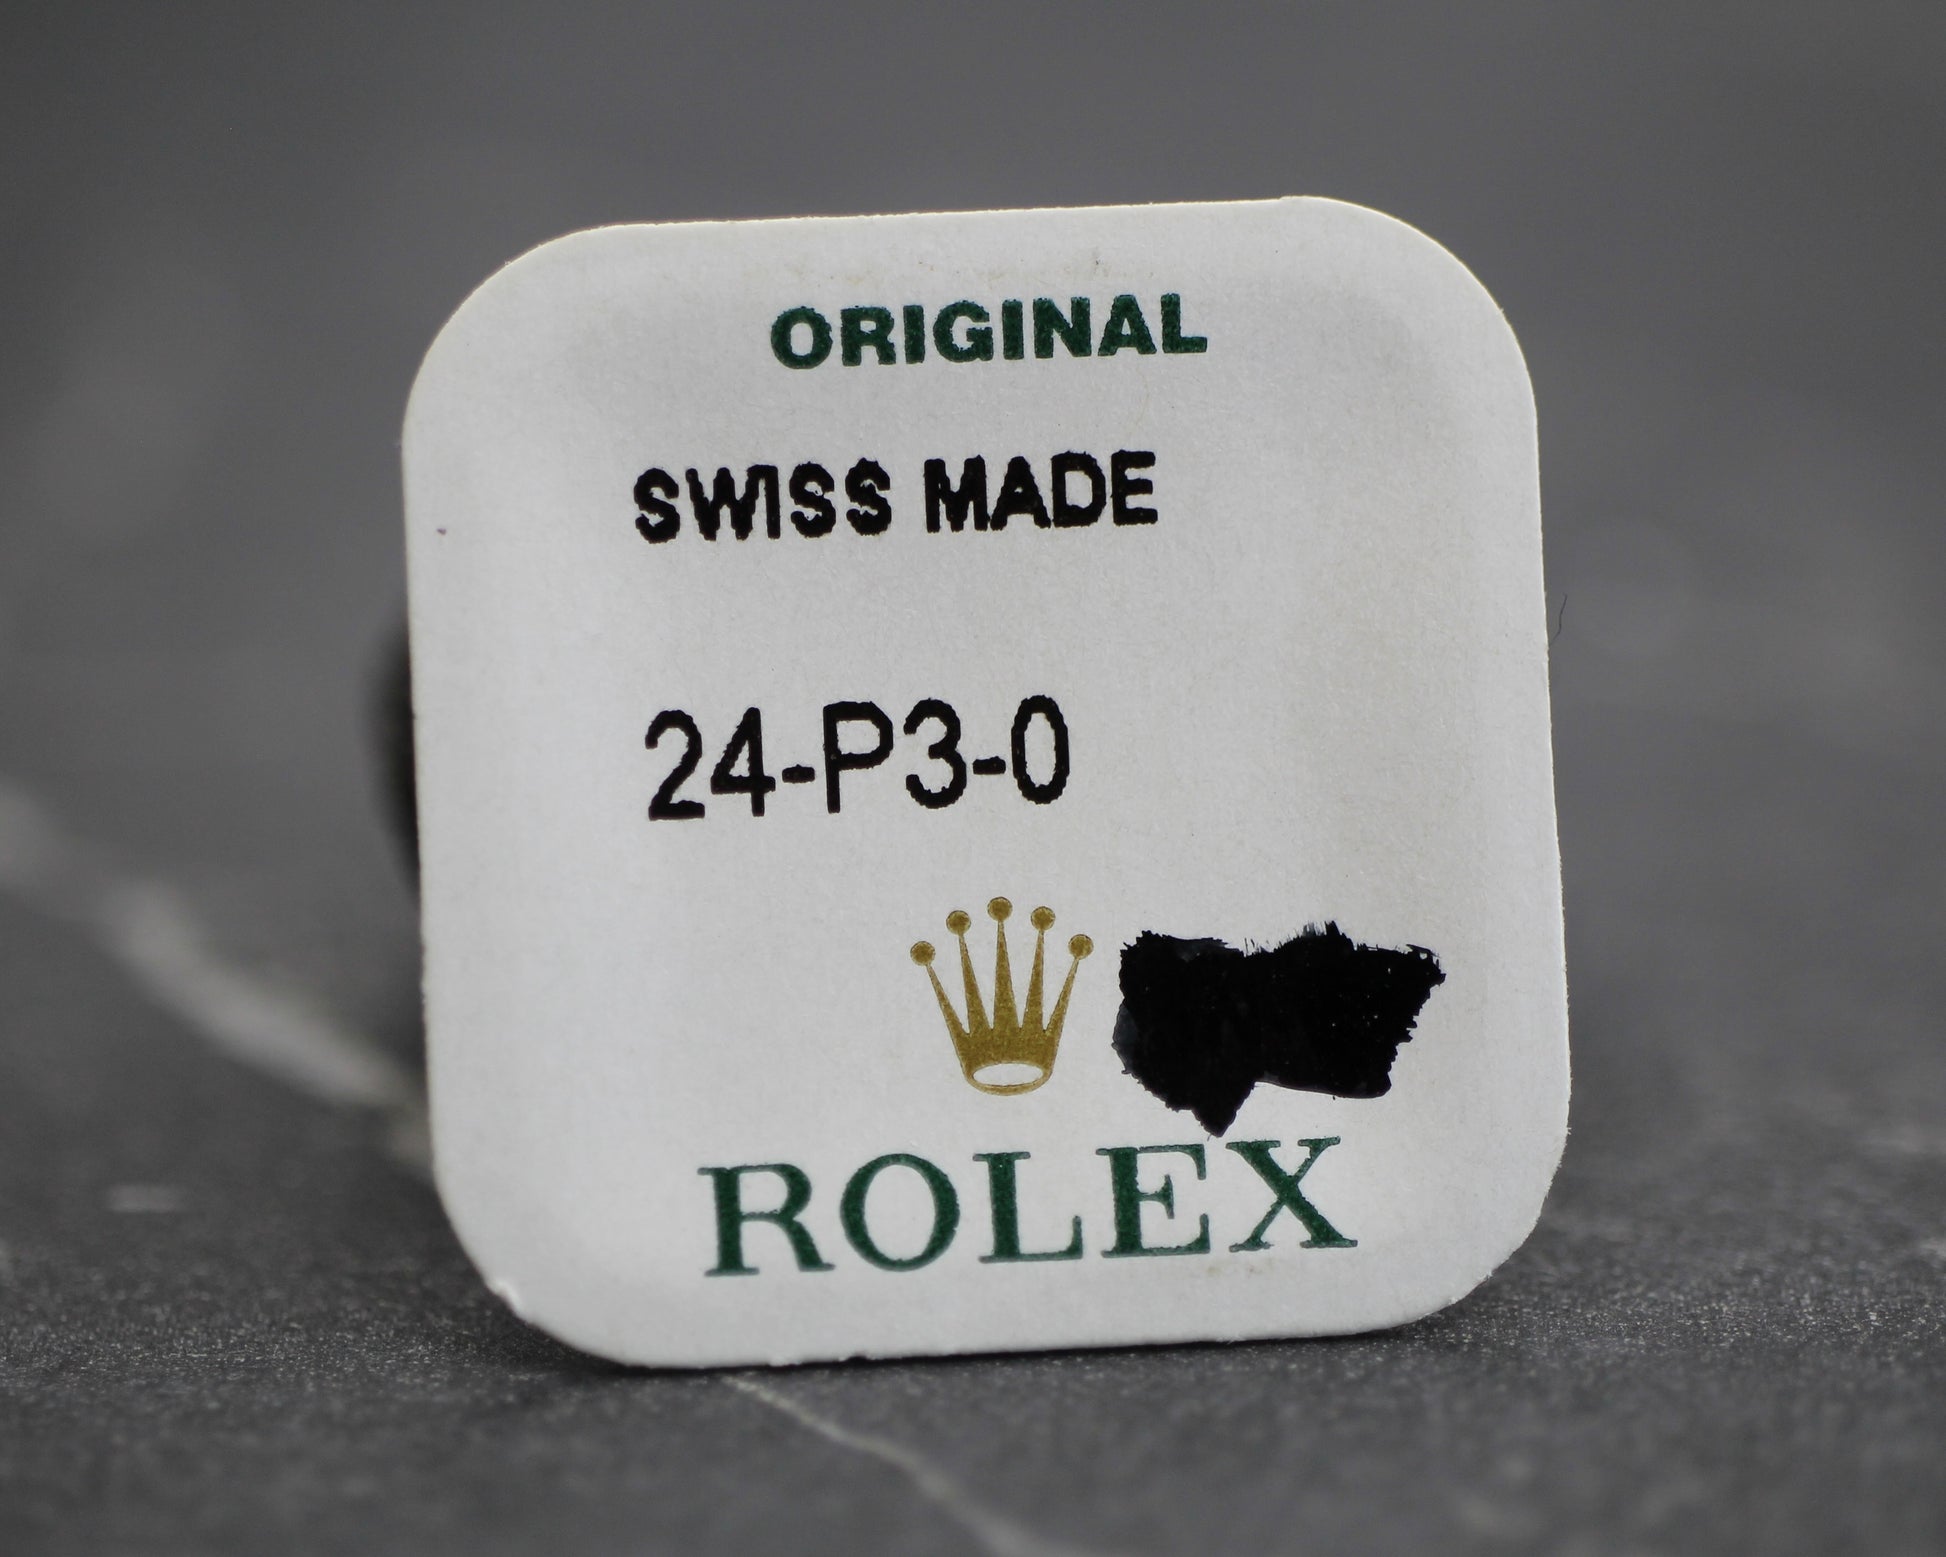 NEW Rolex Daytona 24-P3-0 Pulsante Acciaio 6239 | 6262 | 6264 Vintage NOS In Blister